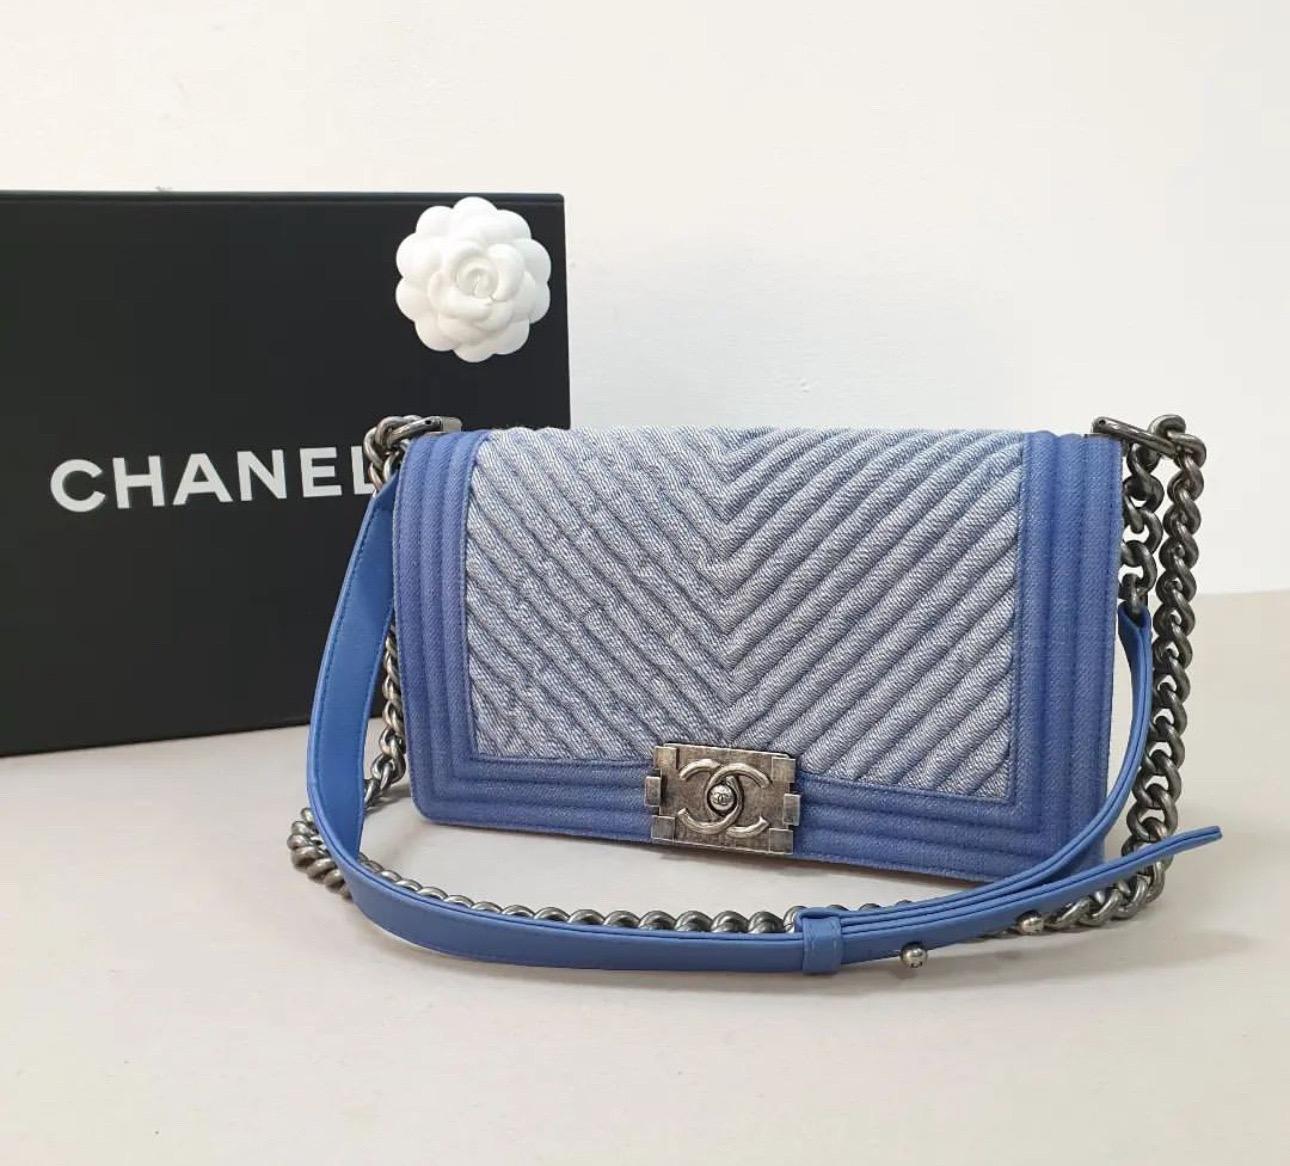 Chanel Boy Denim Chevron Small bag de la collection printemps 2019

Très bon état.


25*15*9cm